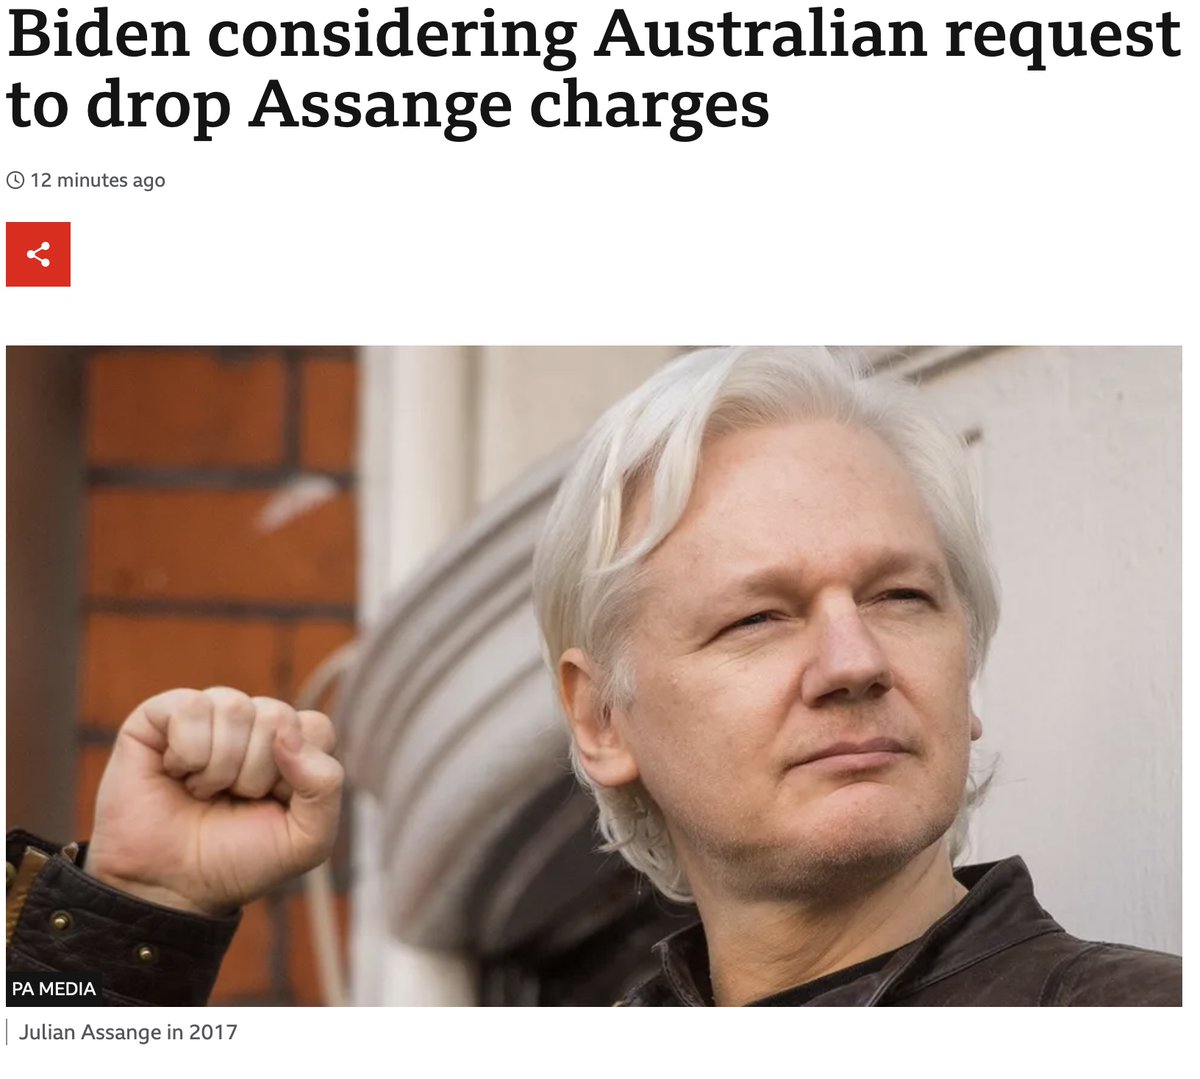 #Assange5YearsInBelmarsh 
Biden's cheap gaslighting..